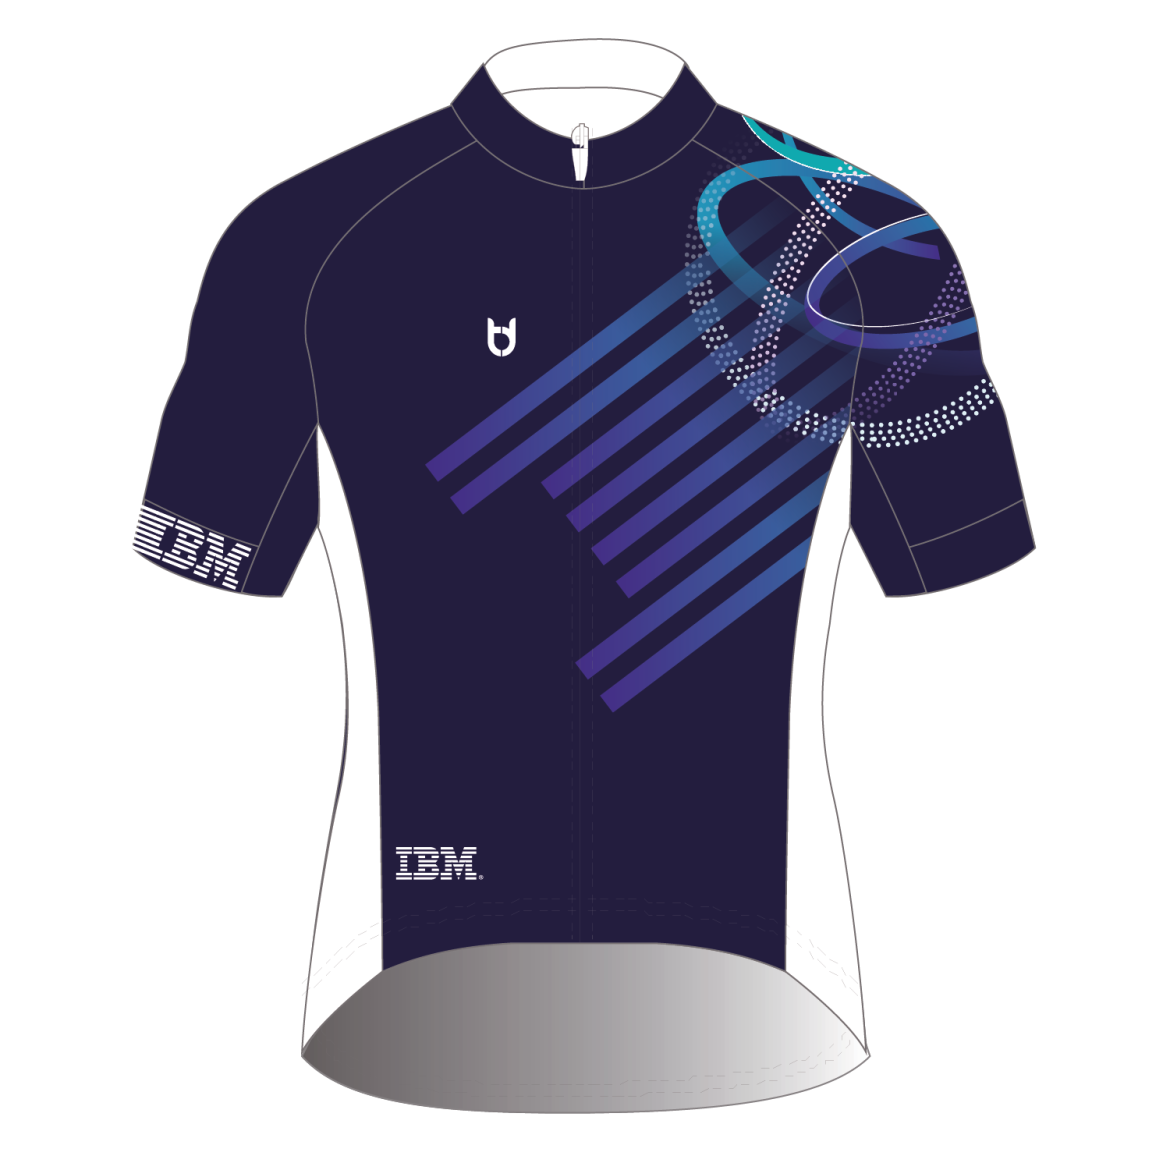 IBM cycling jersey order